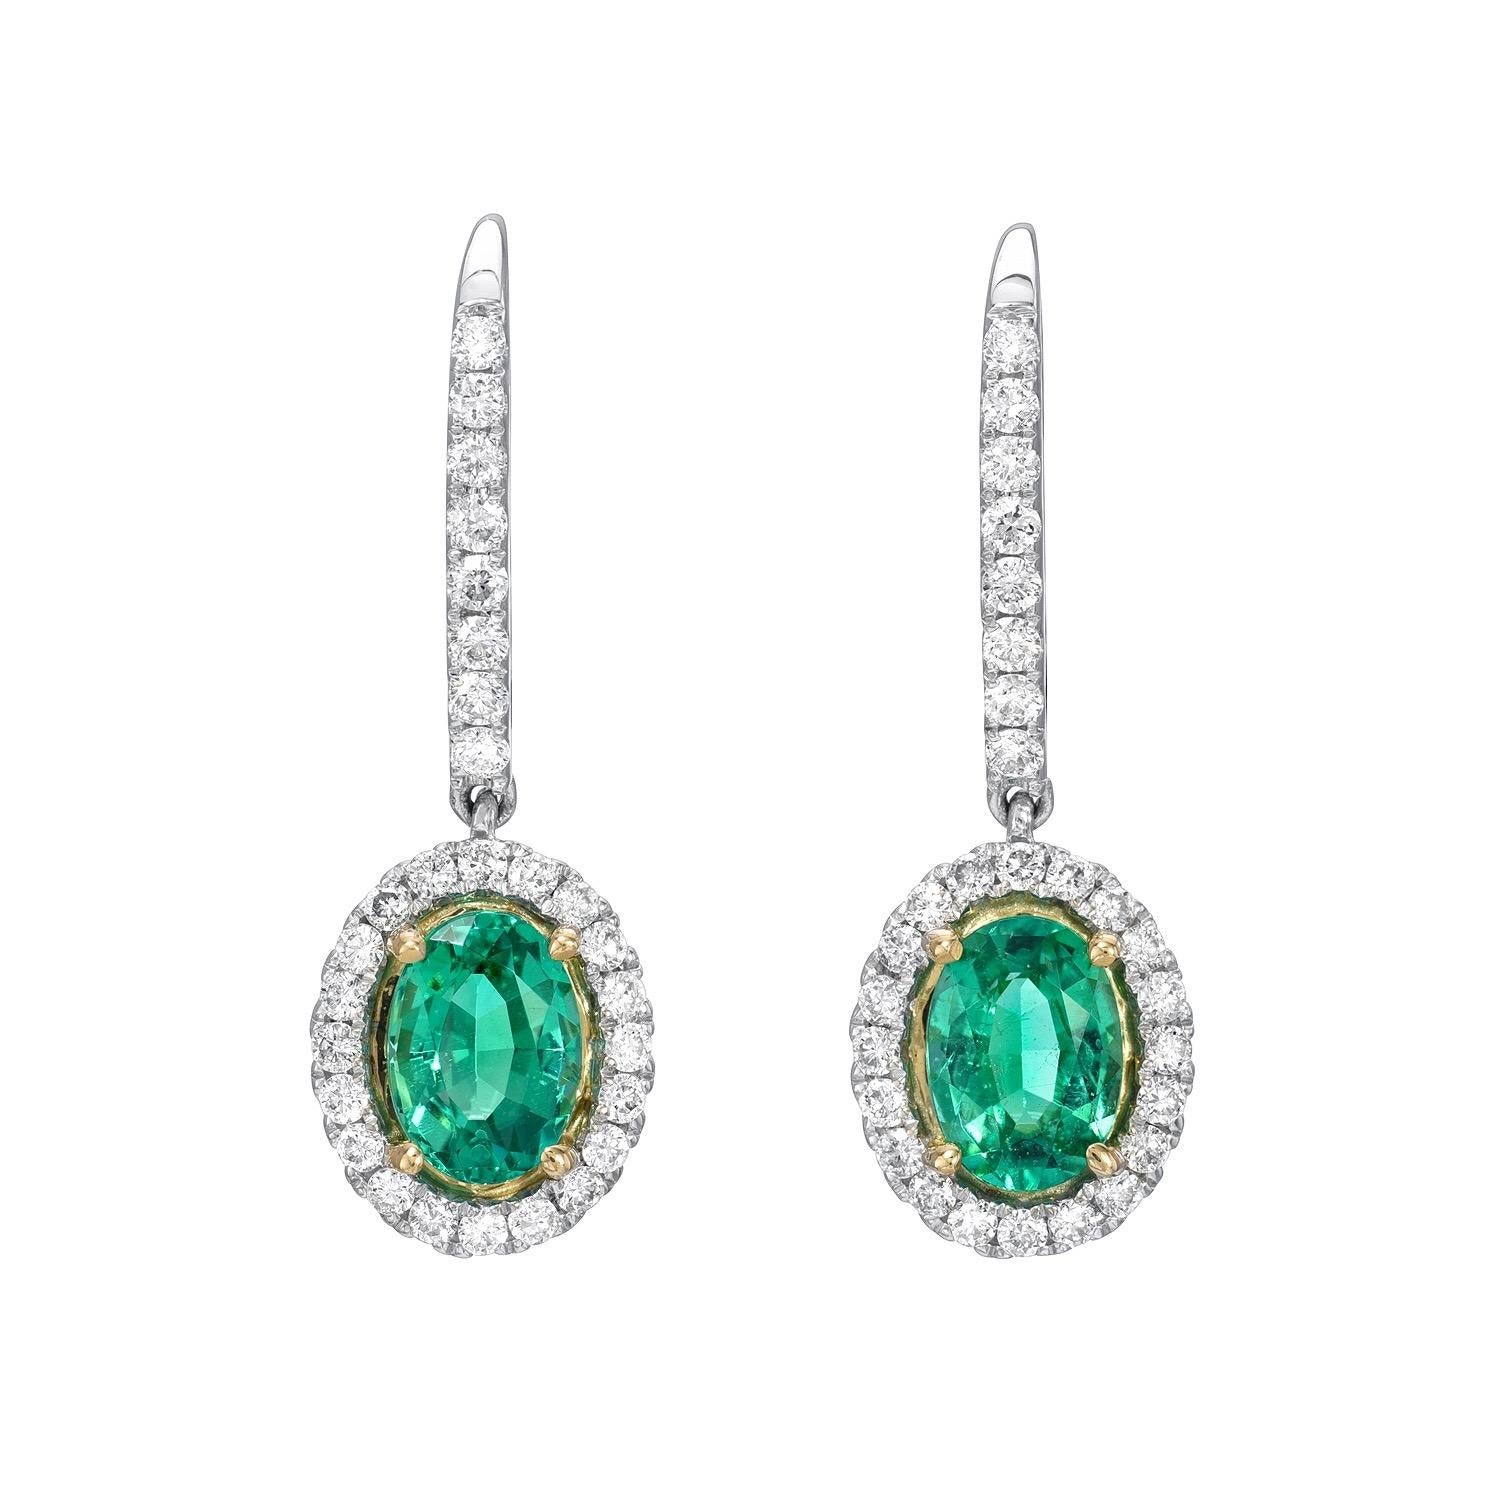 Contemporary Emerald Earrings 1.48 Carat Ovals